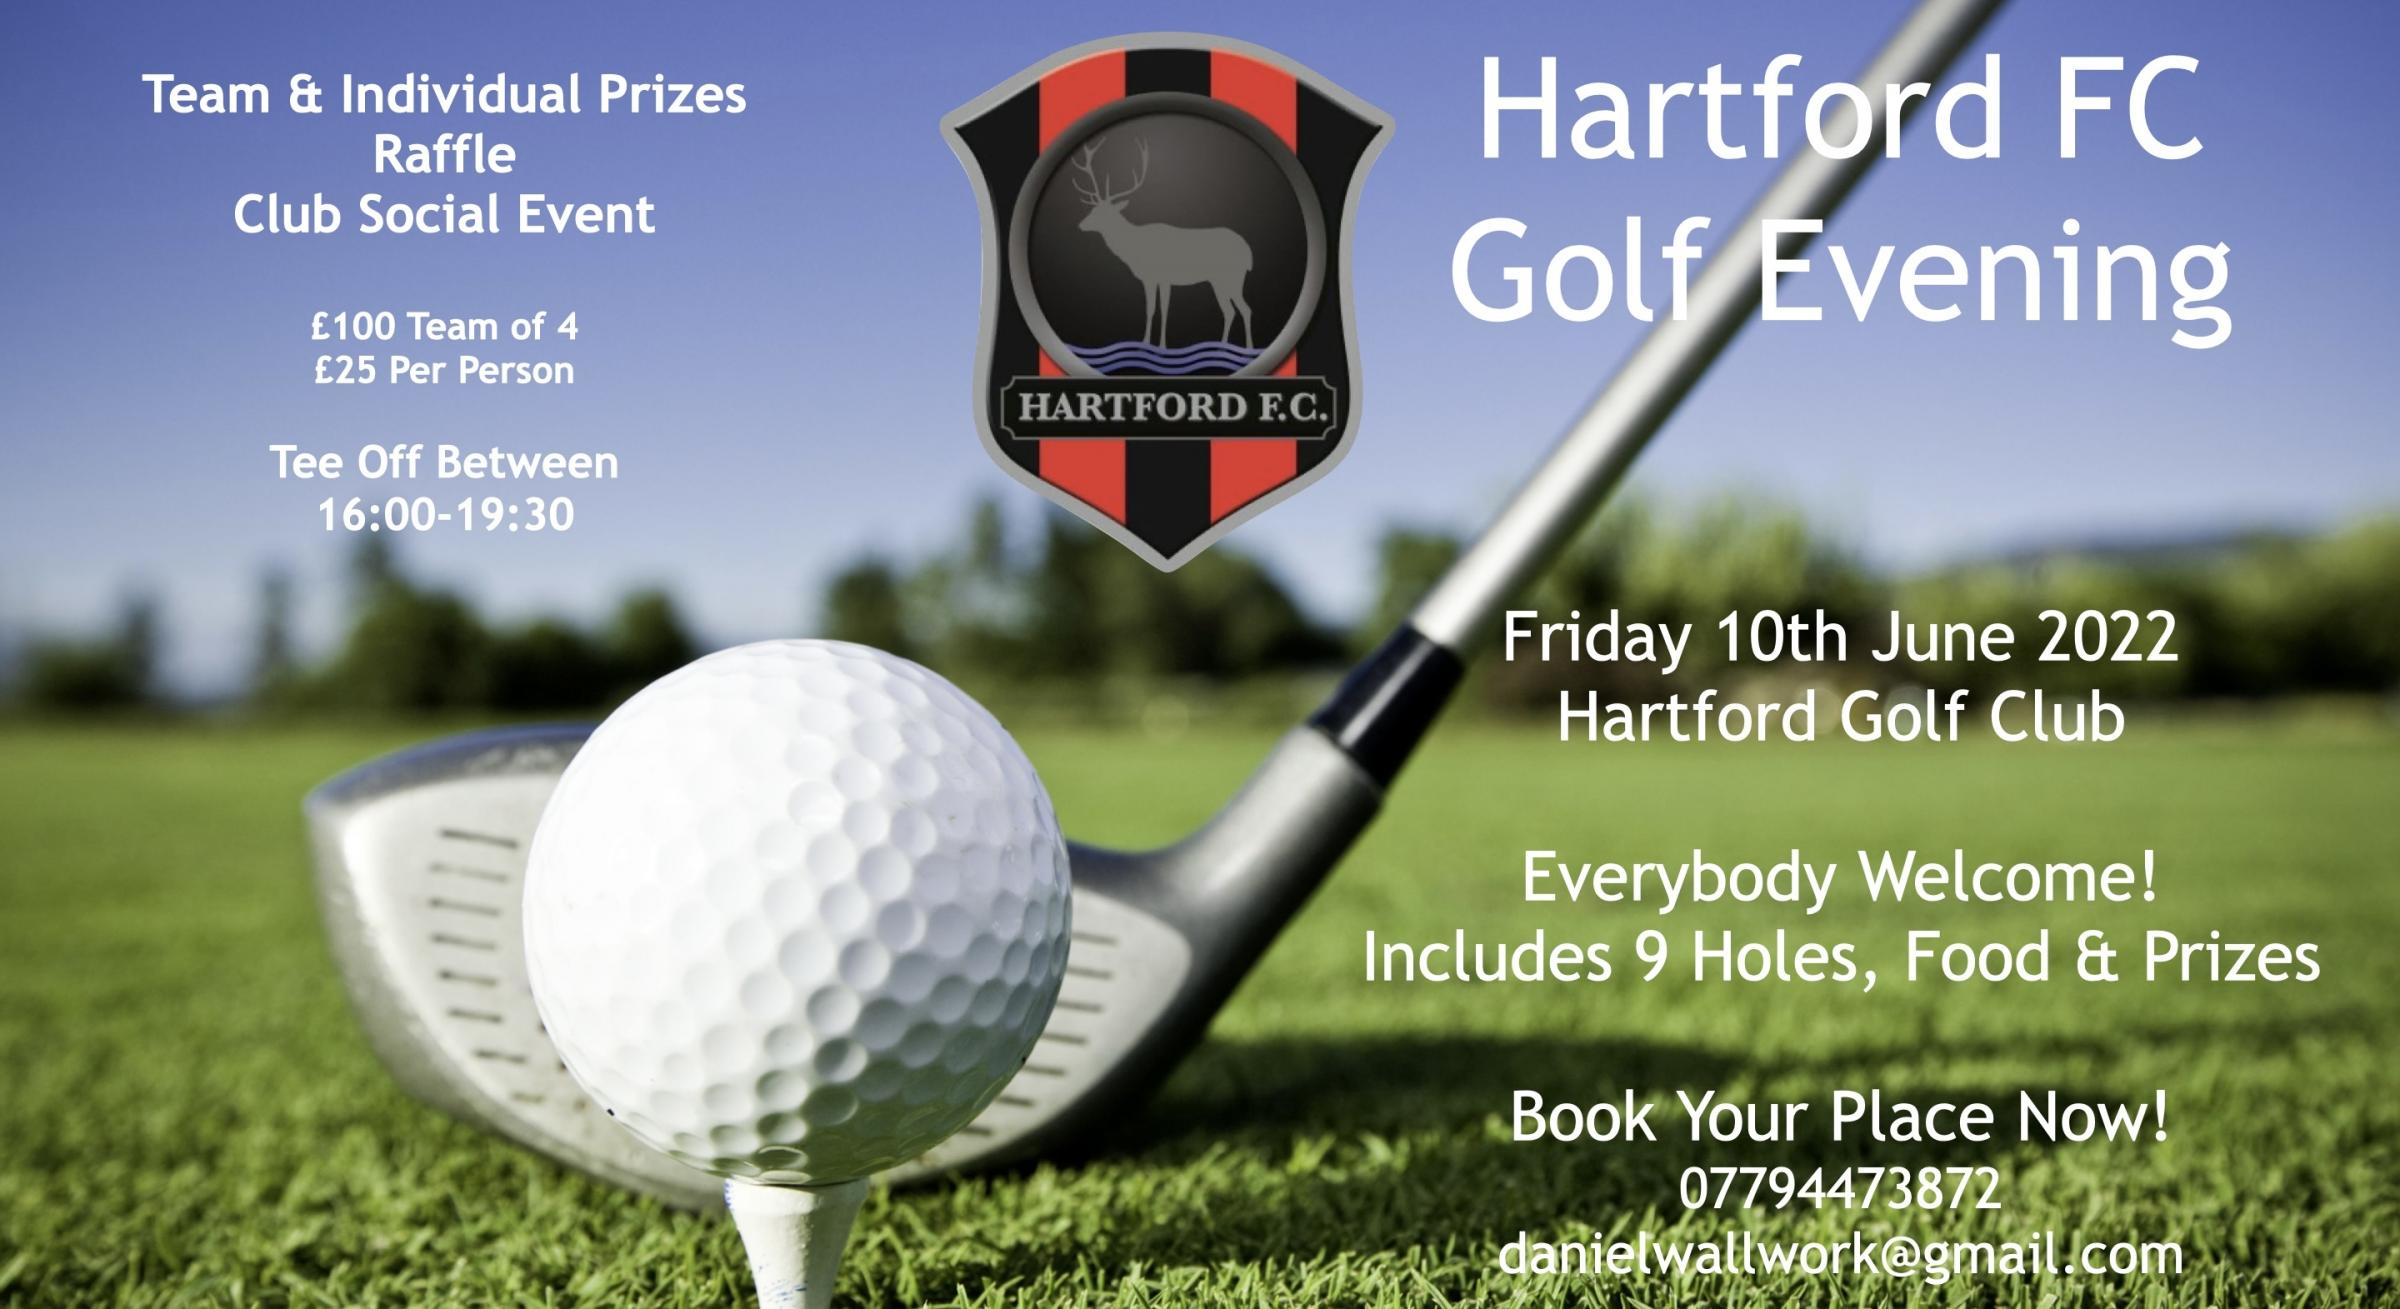 Golf evening at Hartford Golf Club to raise funds for Hartford Football Club